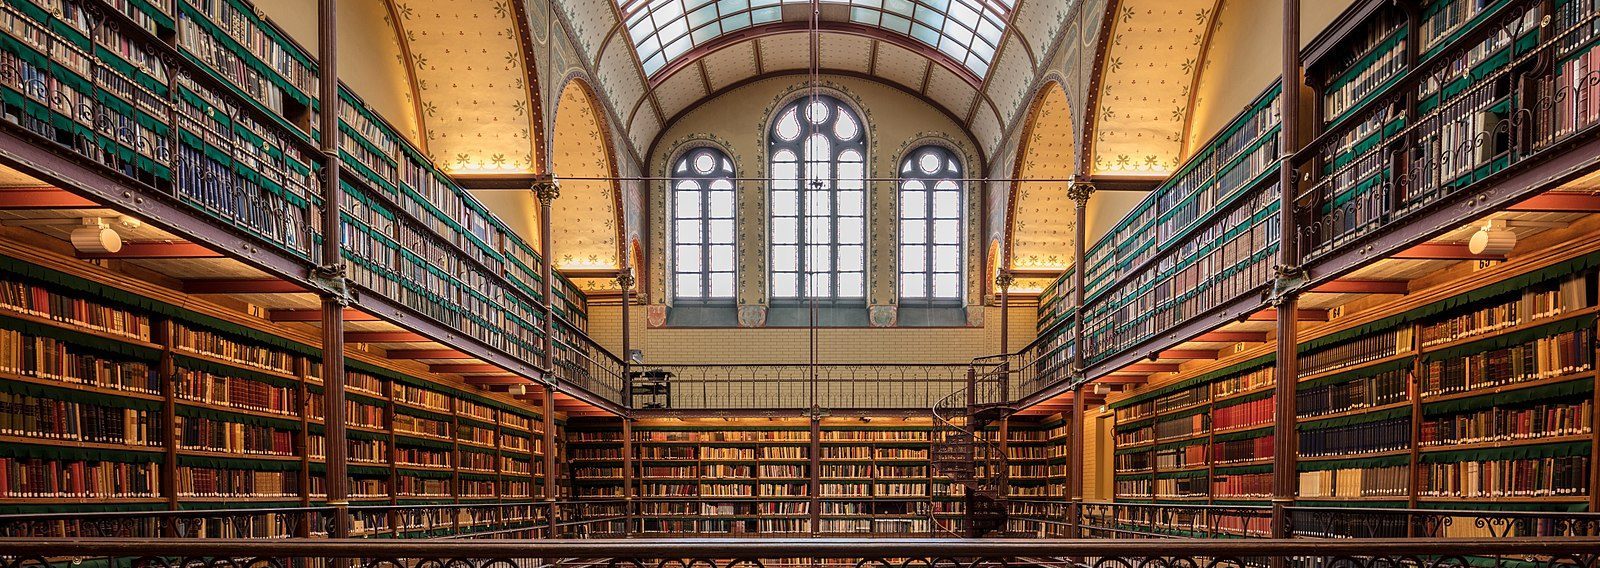 Amsterdam Rijksmuseum Library